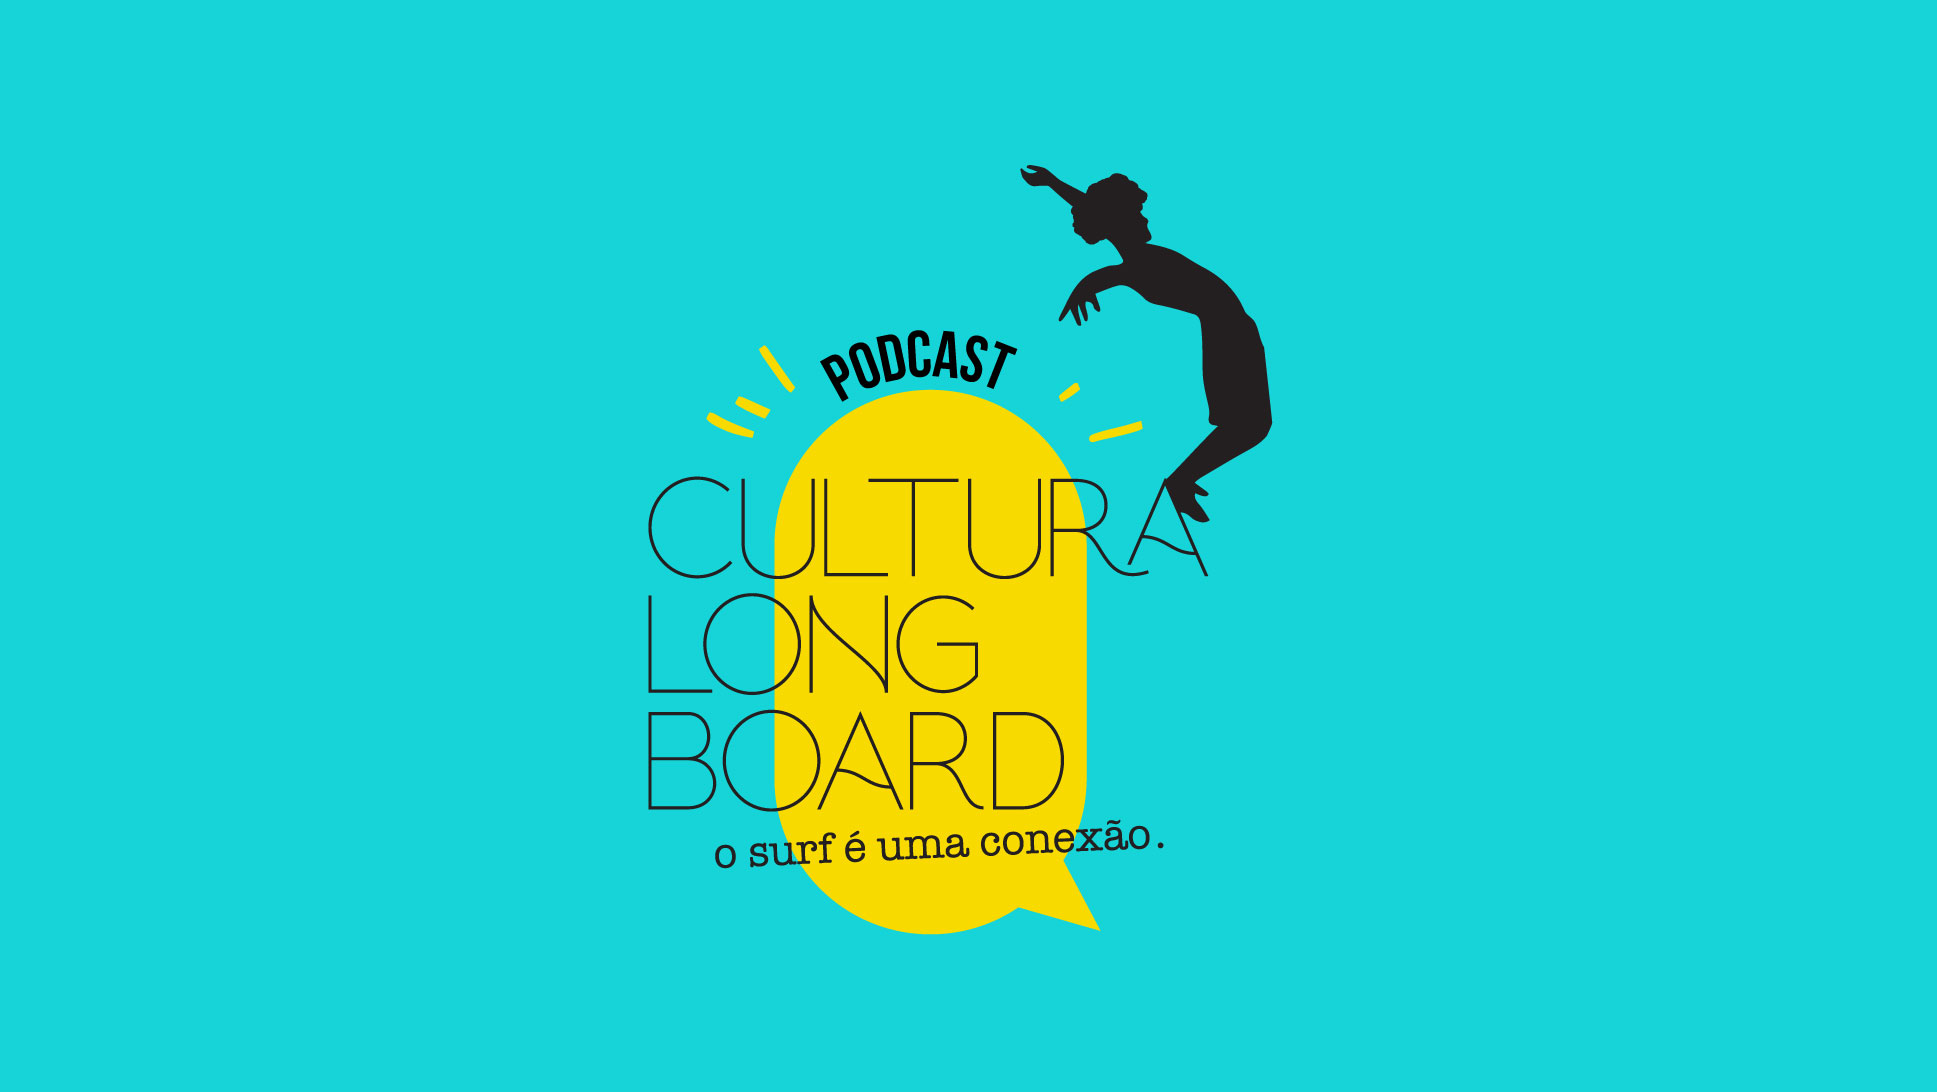 Nova marca para o Podcast Cultura Longboard